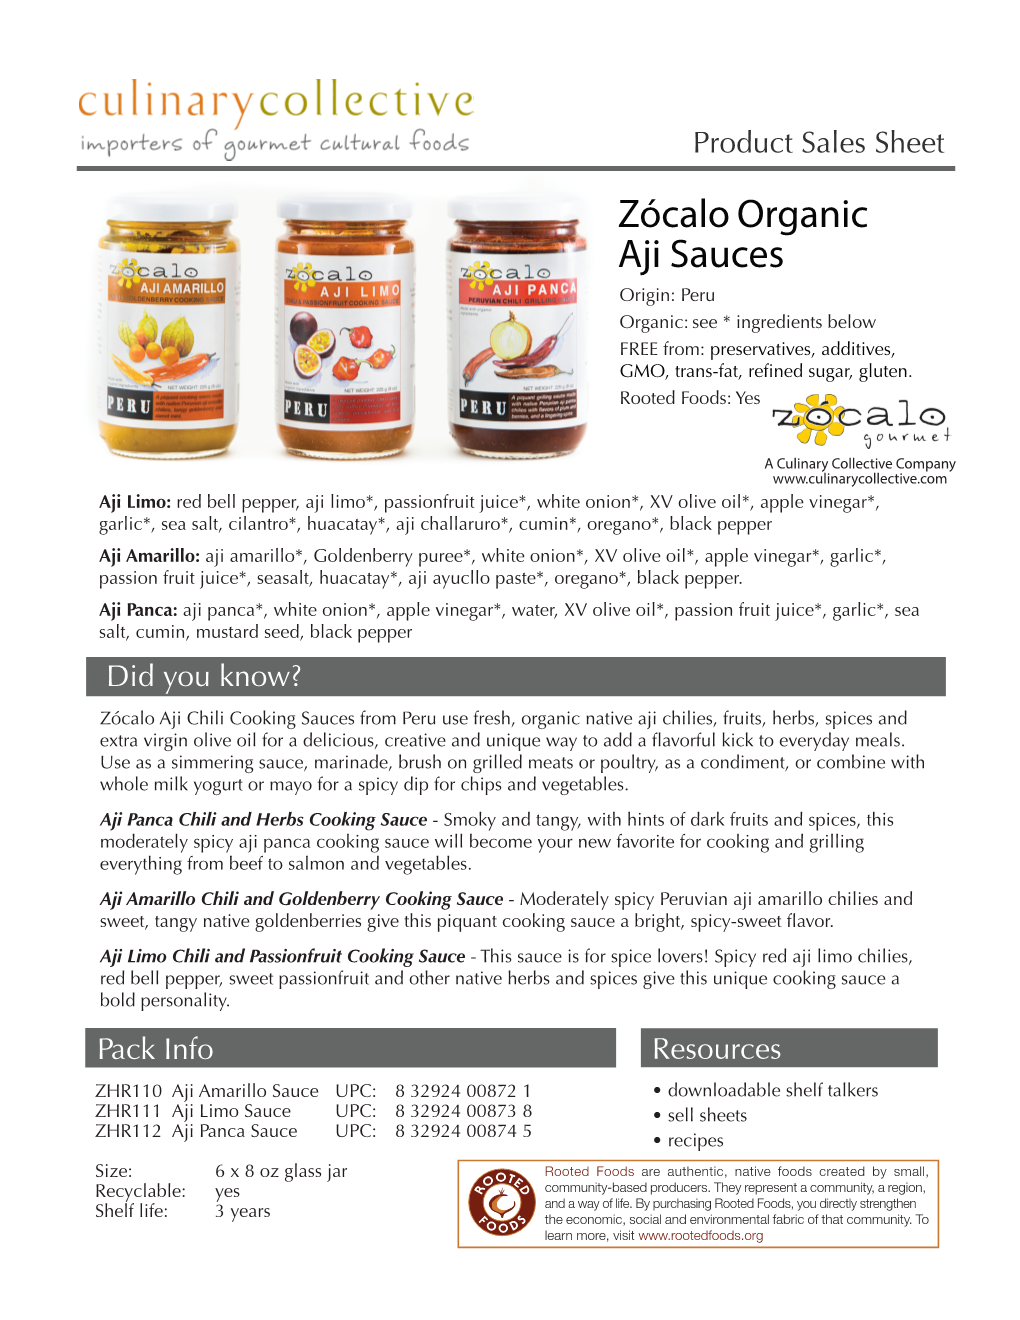 Zócalo Organic Aji Sauces Origin: Peru Organic: See * Ingredients Below FREE From: Preservatives, Additives, GMO, Trans-Fat, Refined Sugar, Gluten